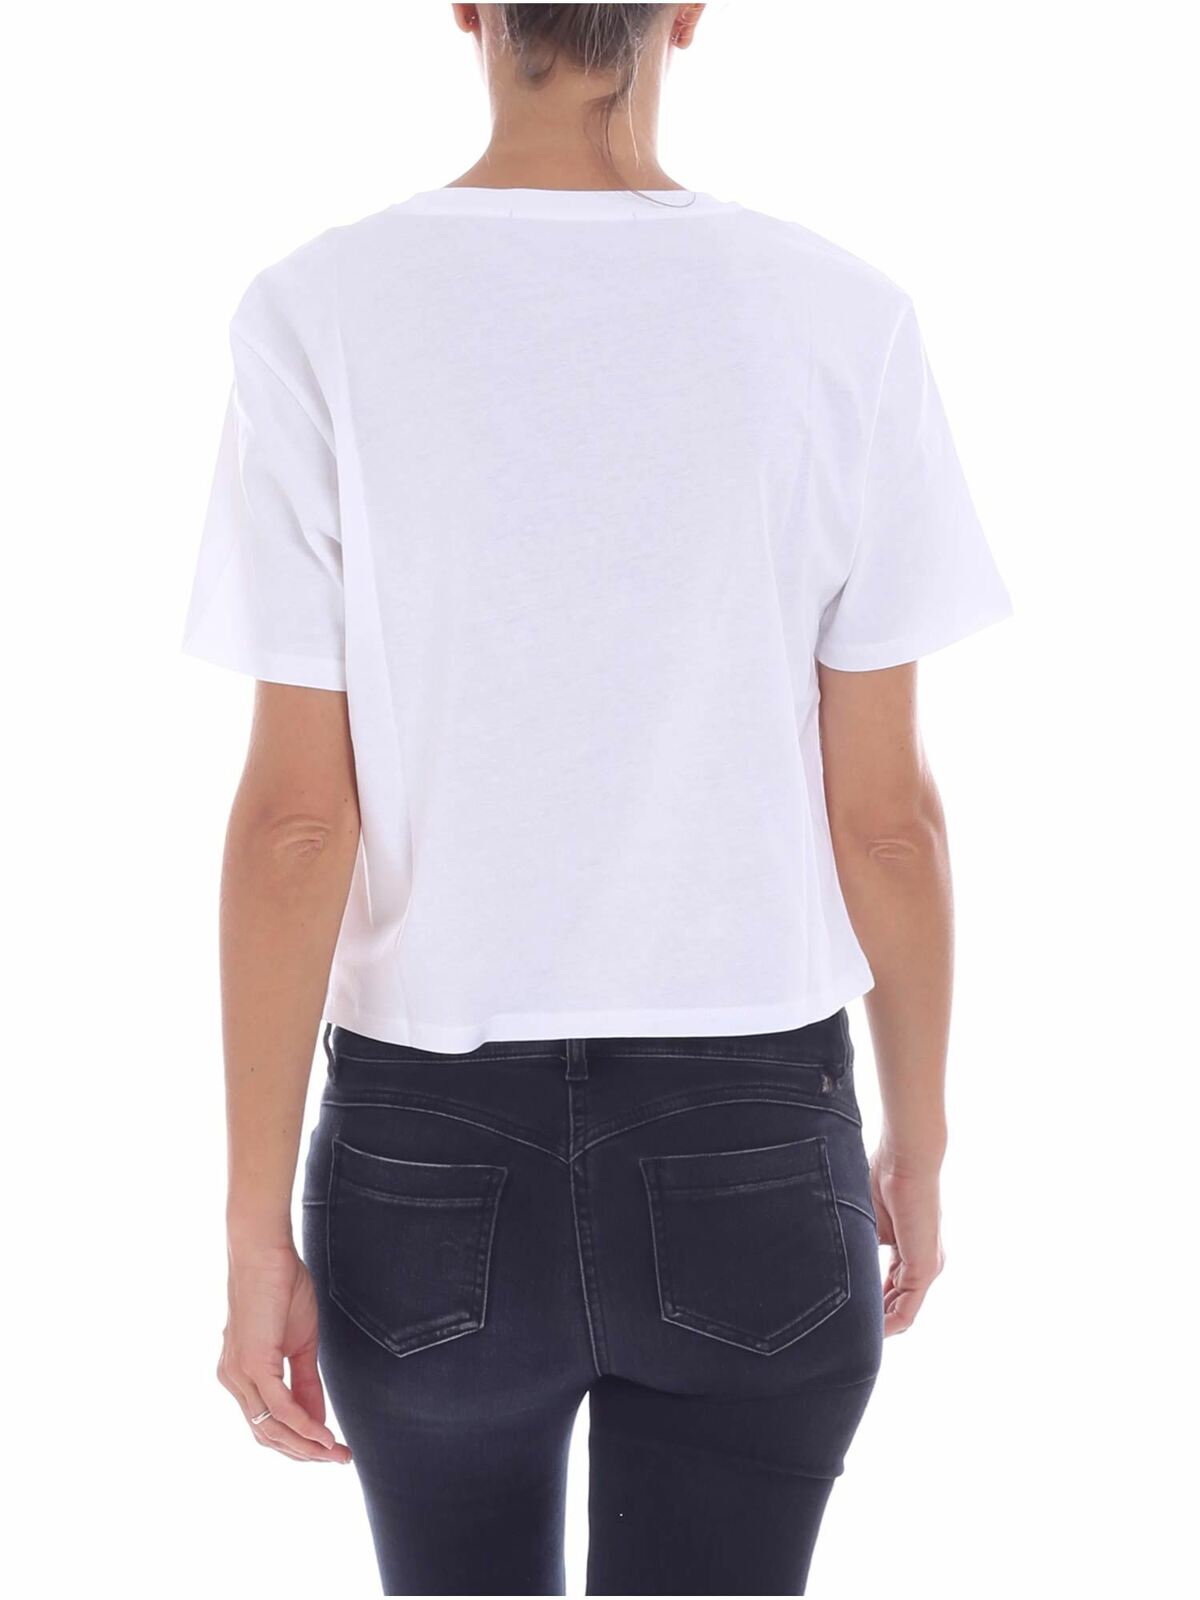 Shop Karl Lagerfeld "karl X Kaia" White T-shirt